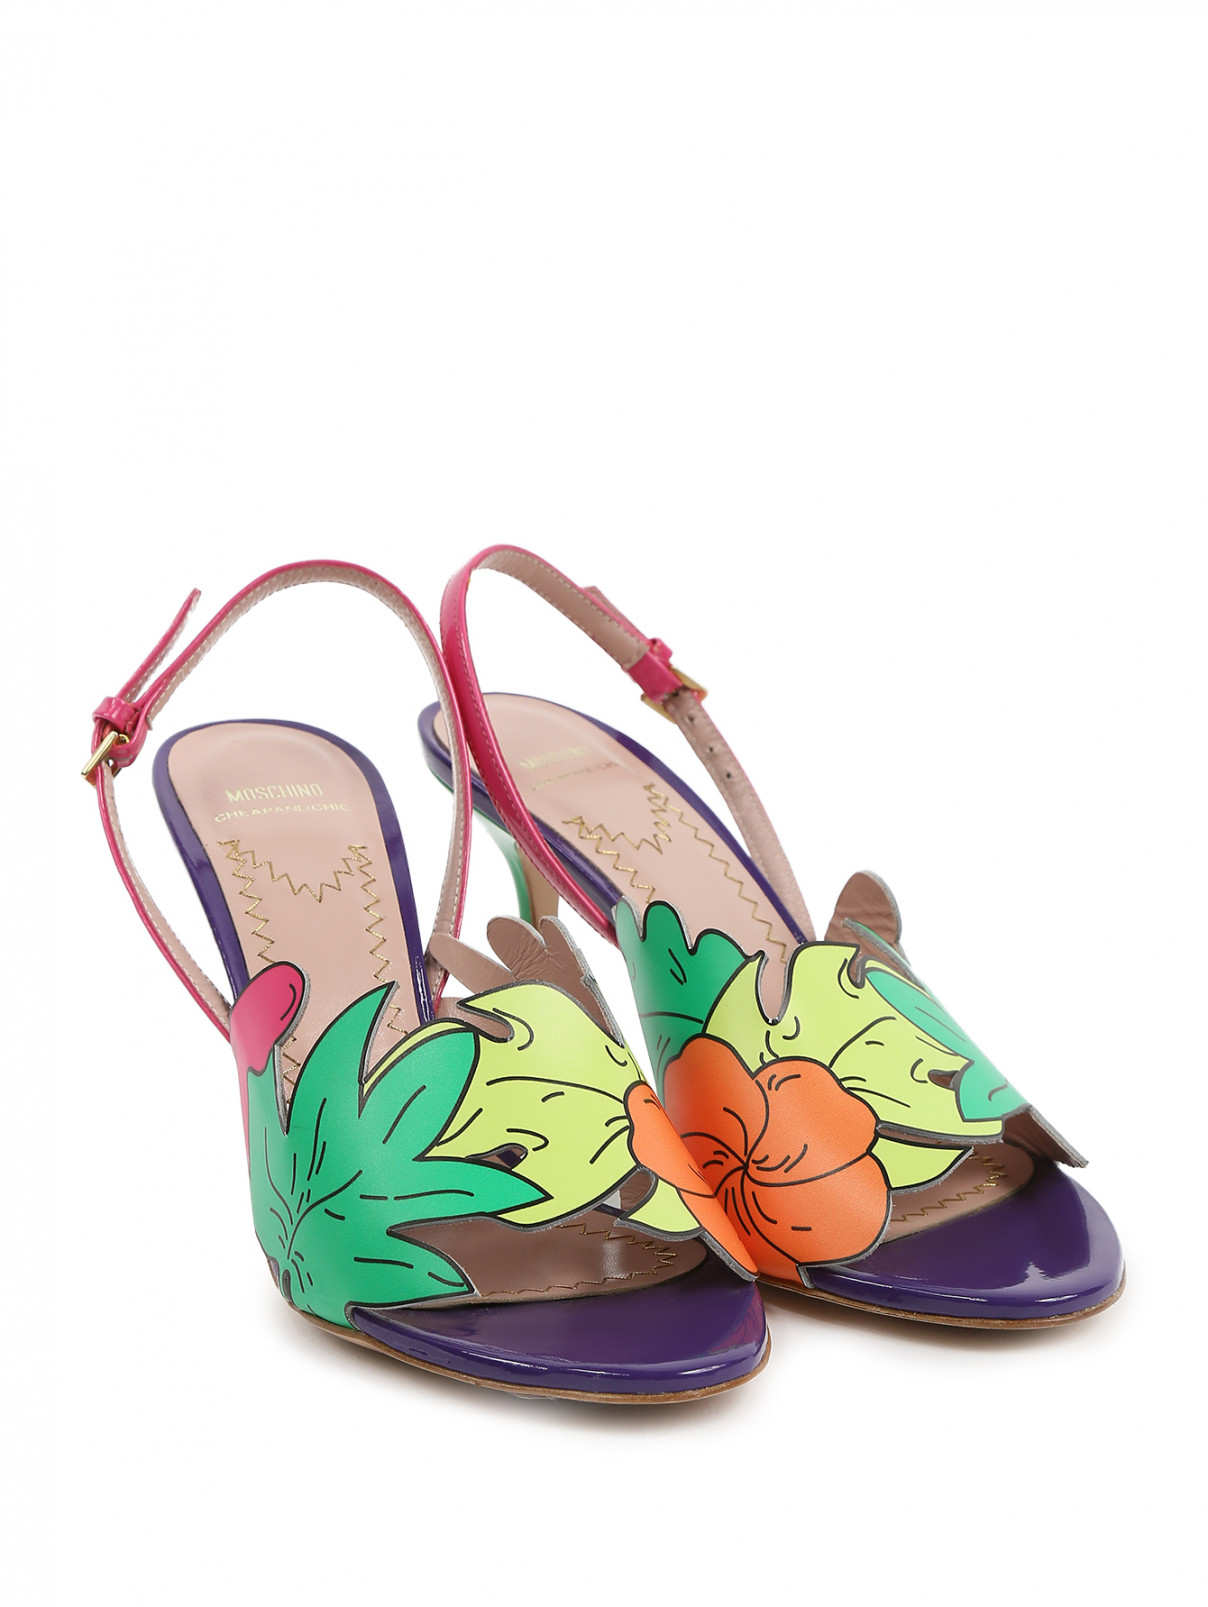 Босоножки из замши на устойчивом каблуке Moschino Couture  –  Общий вид  – Цвет:  Розовый